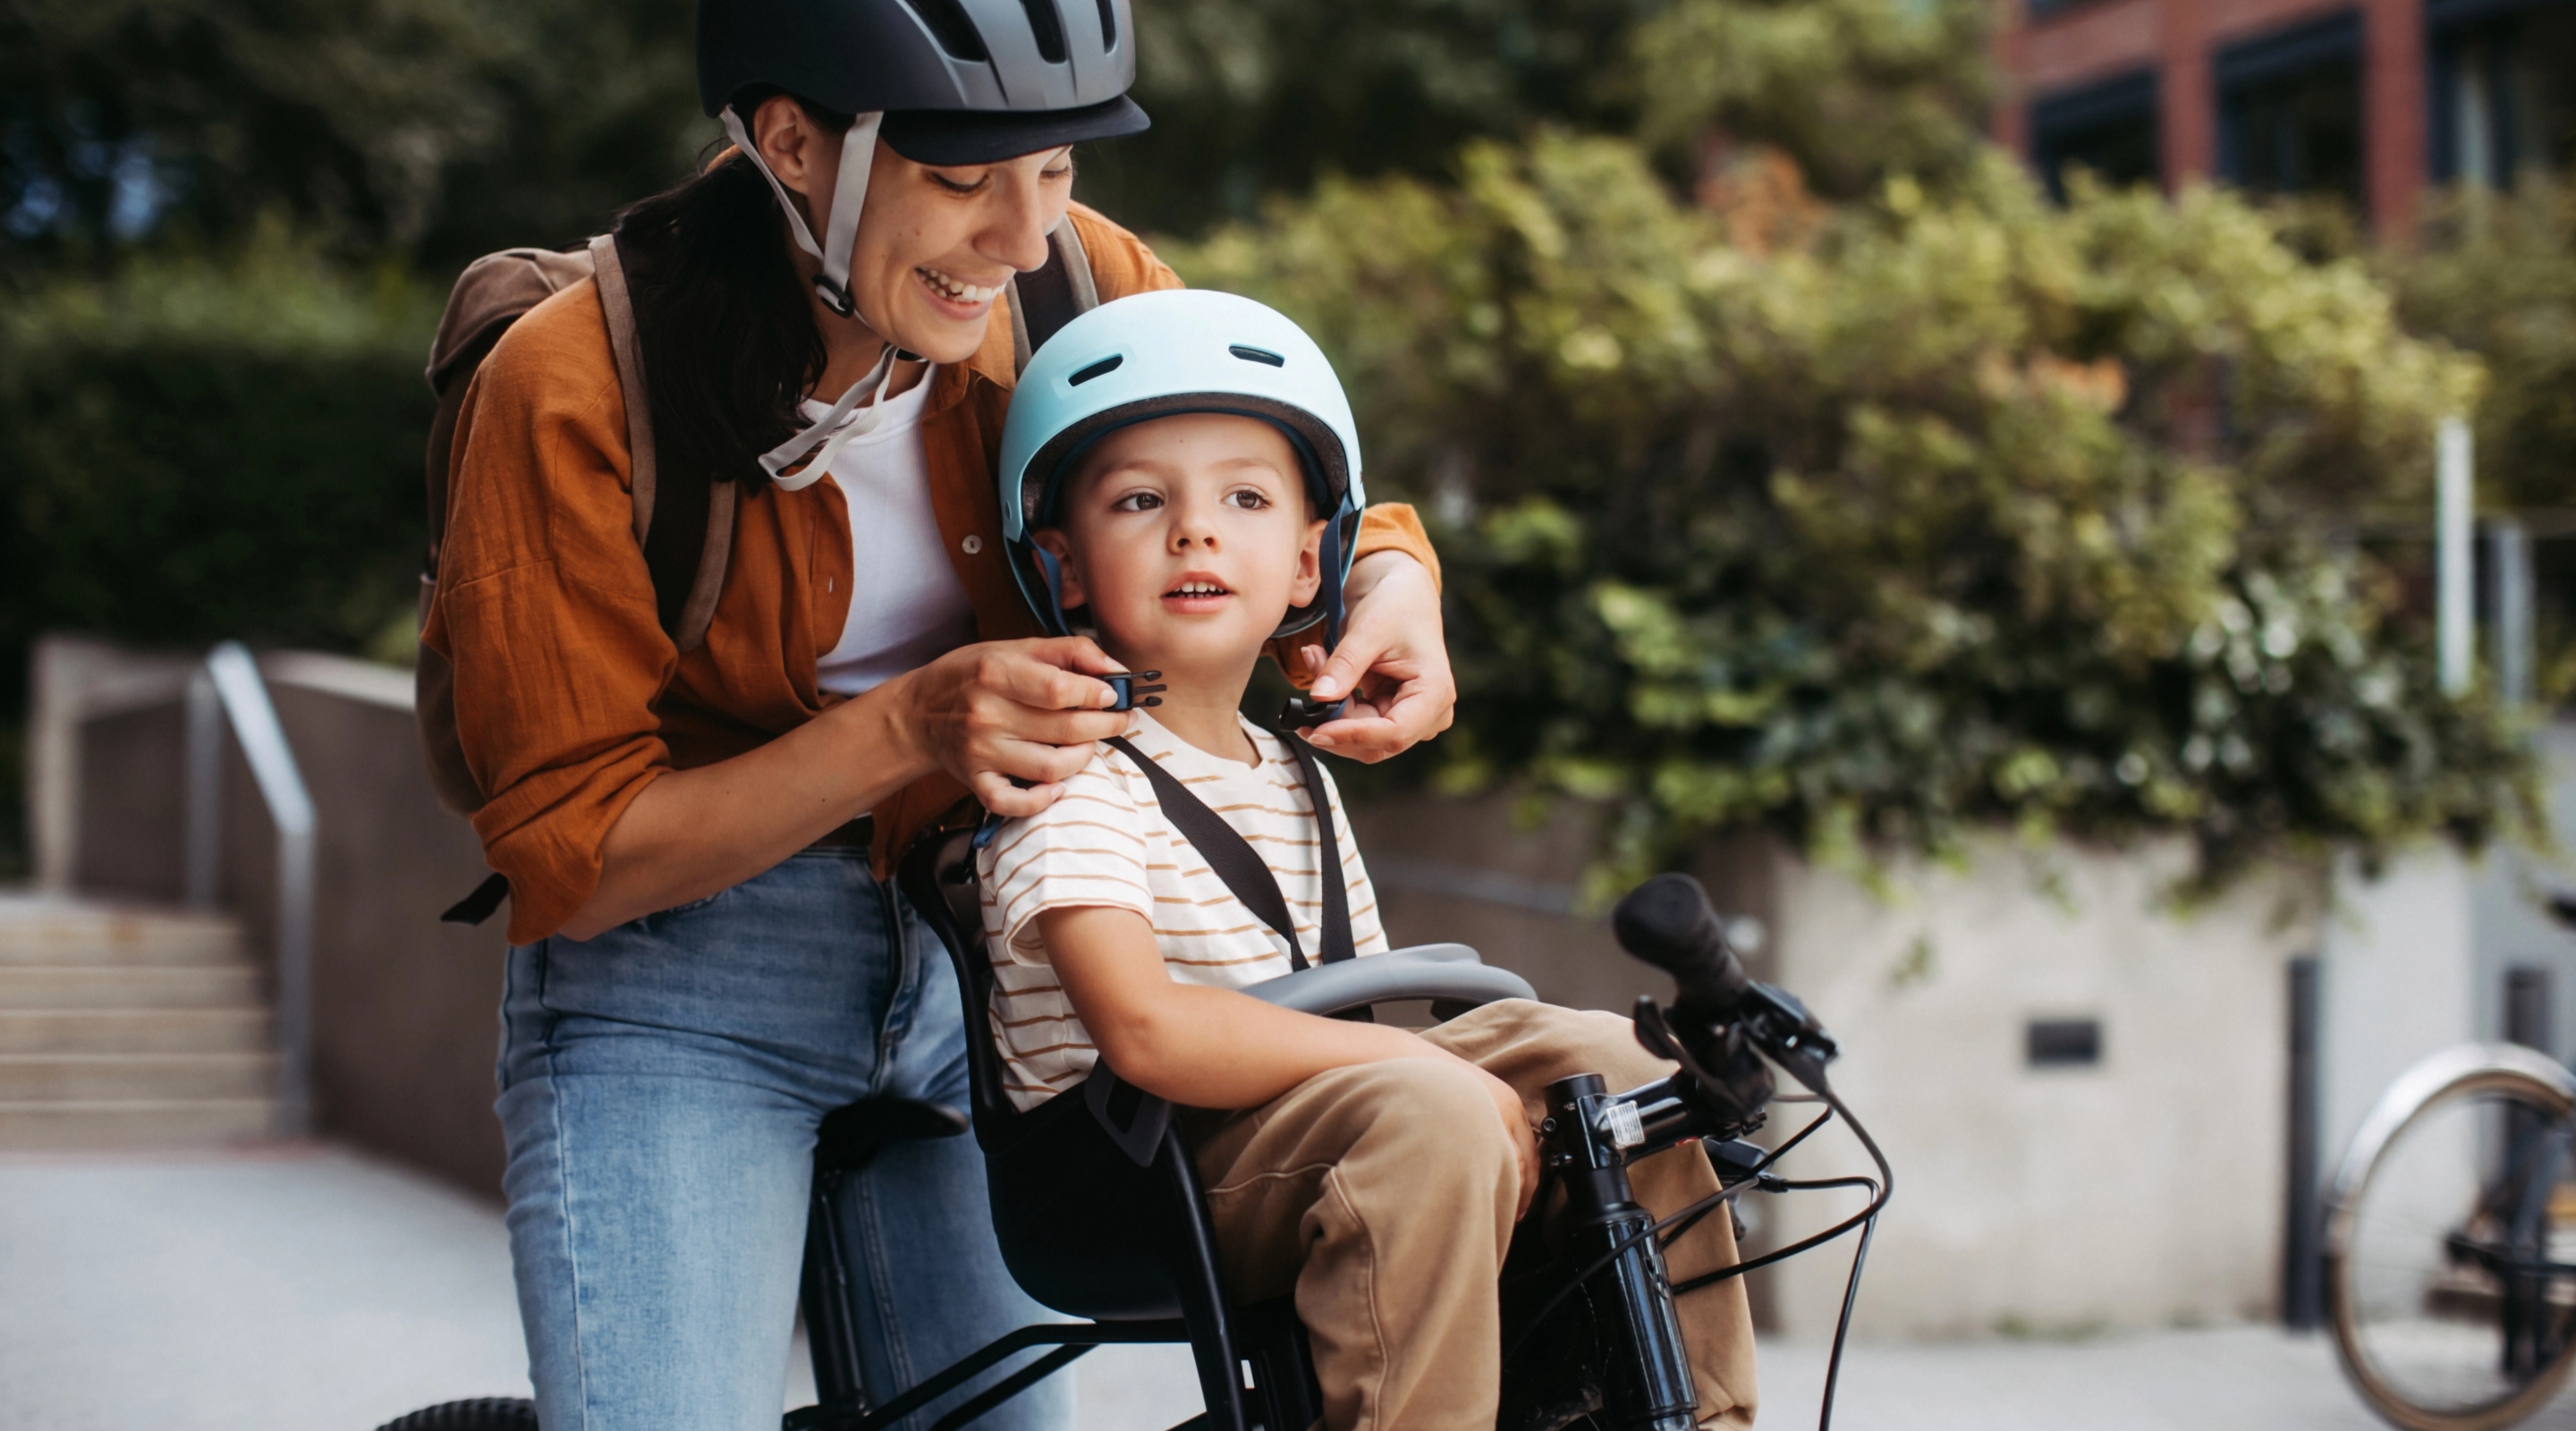 mother-fastening-sons-bike-helmet.jpg